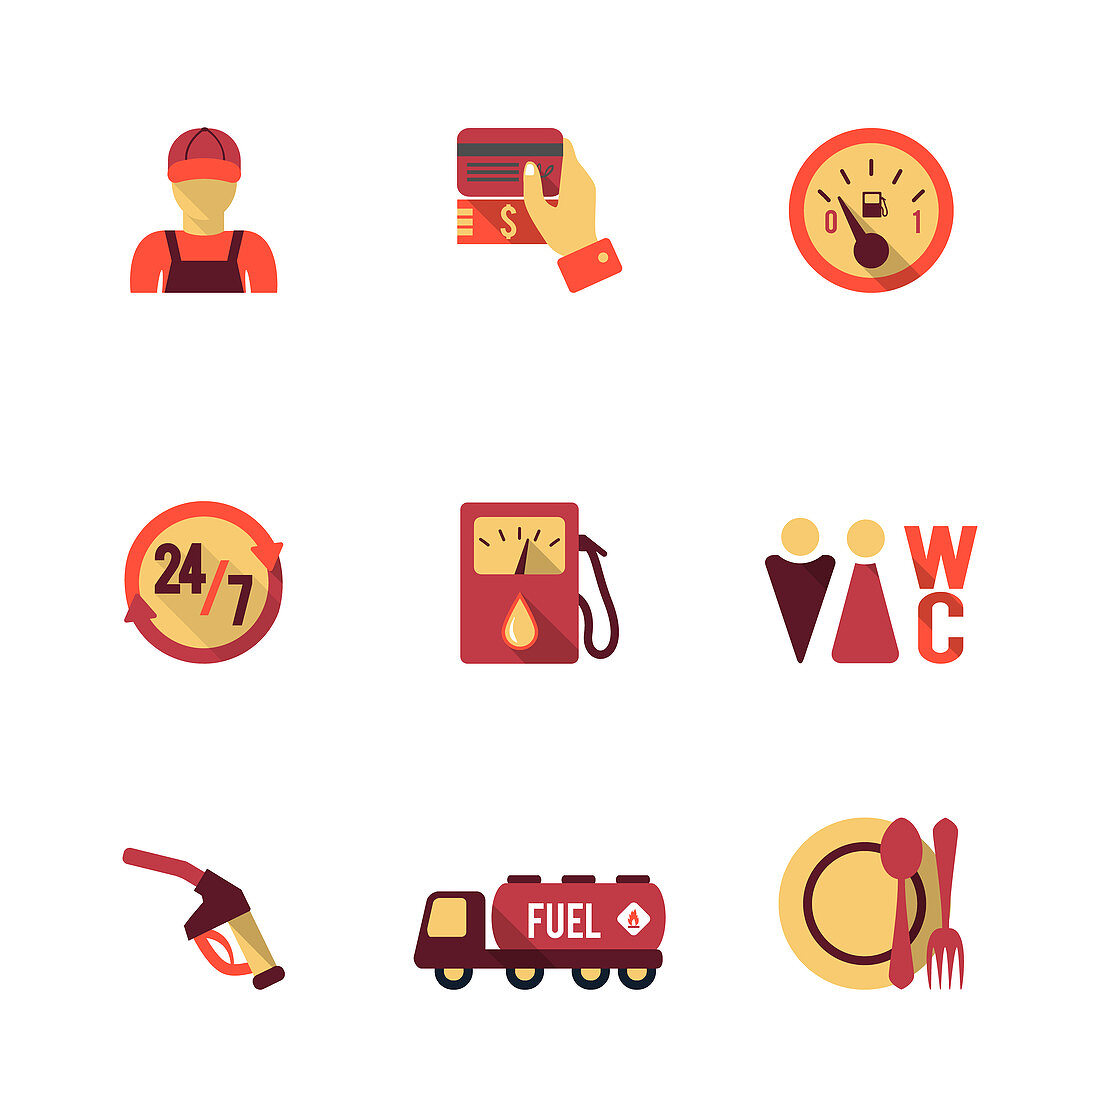 Service station icons, illustration